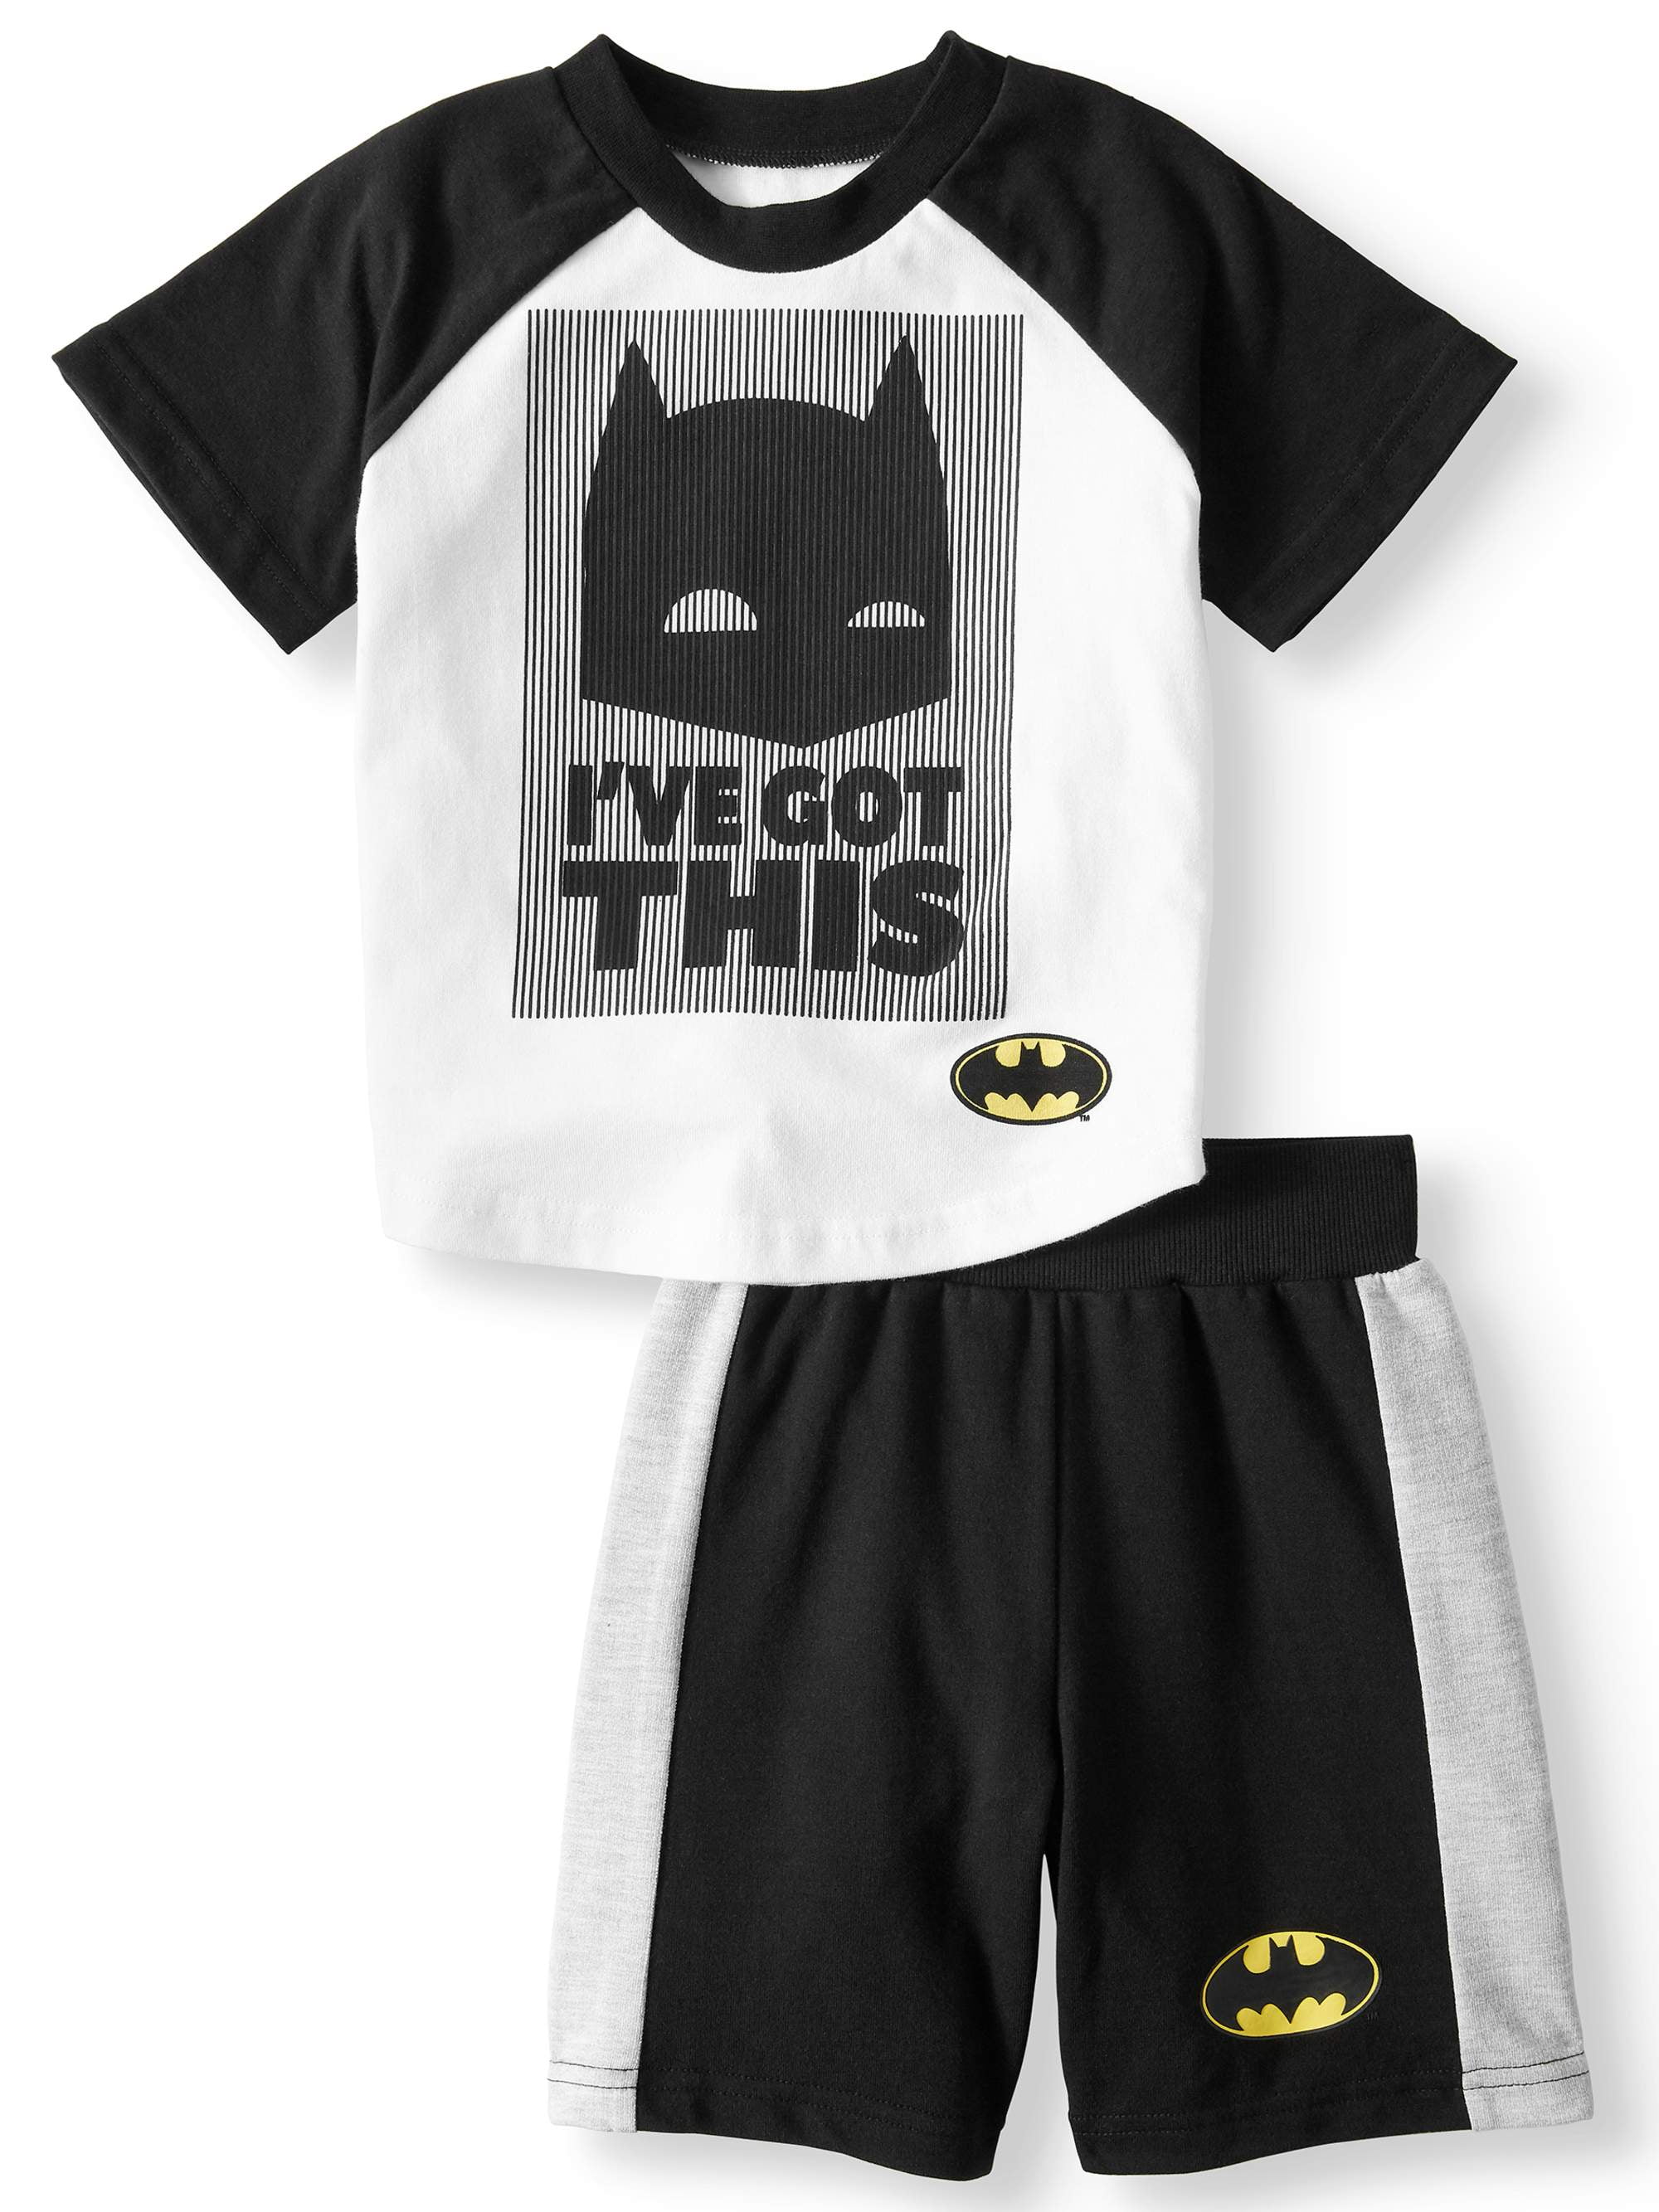 2PCS Baby Kids Toddler Boys Batman T shirt Tops+Pants Casual Outfits Clothes Set 